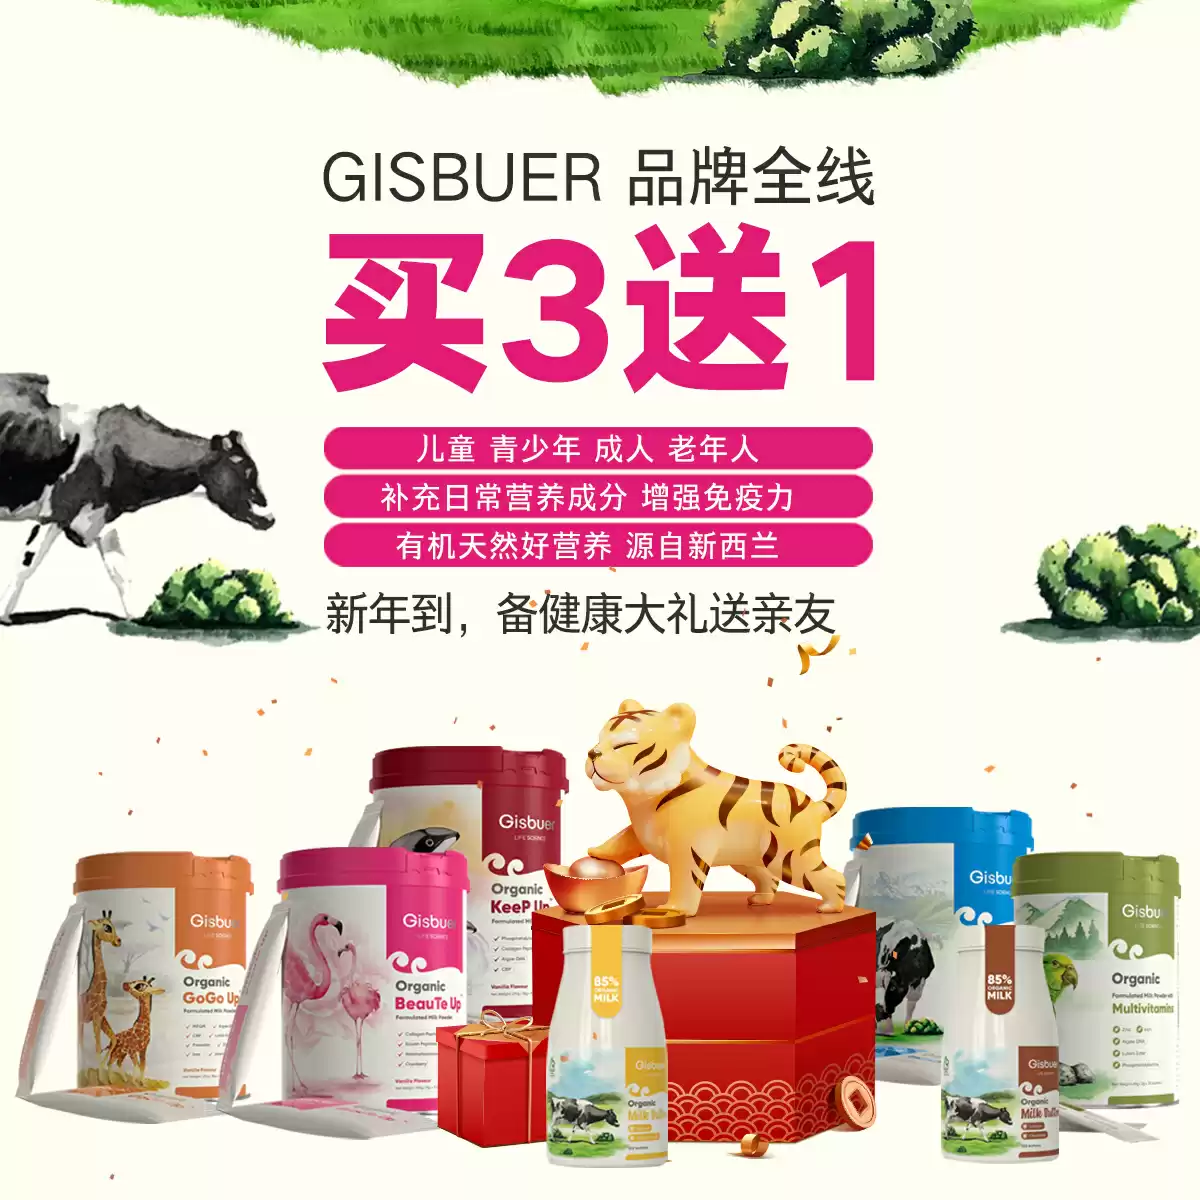 Gisbuer brand promotion Buy 3 get 1 for free